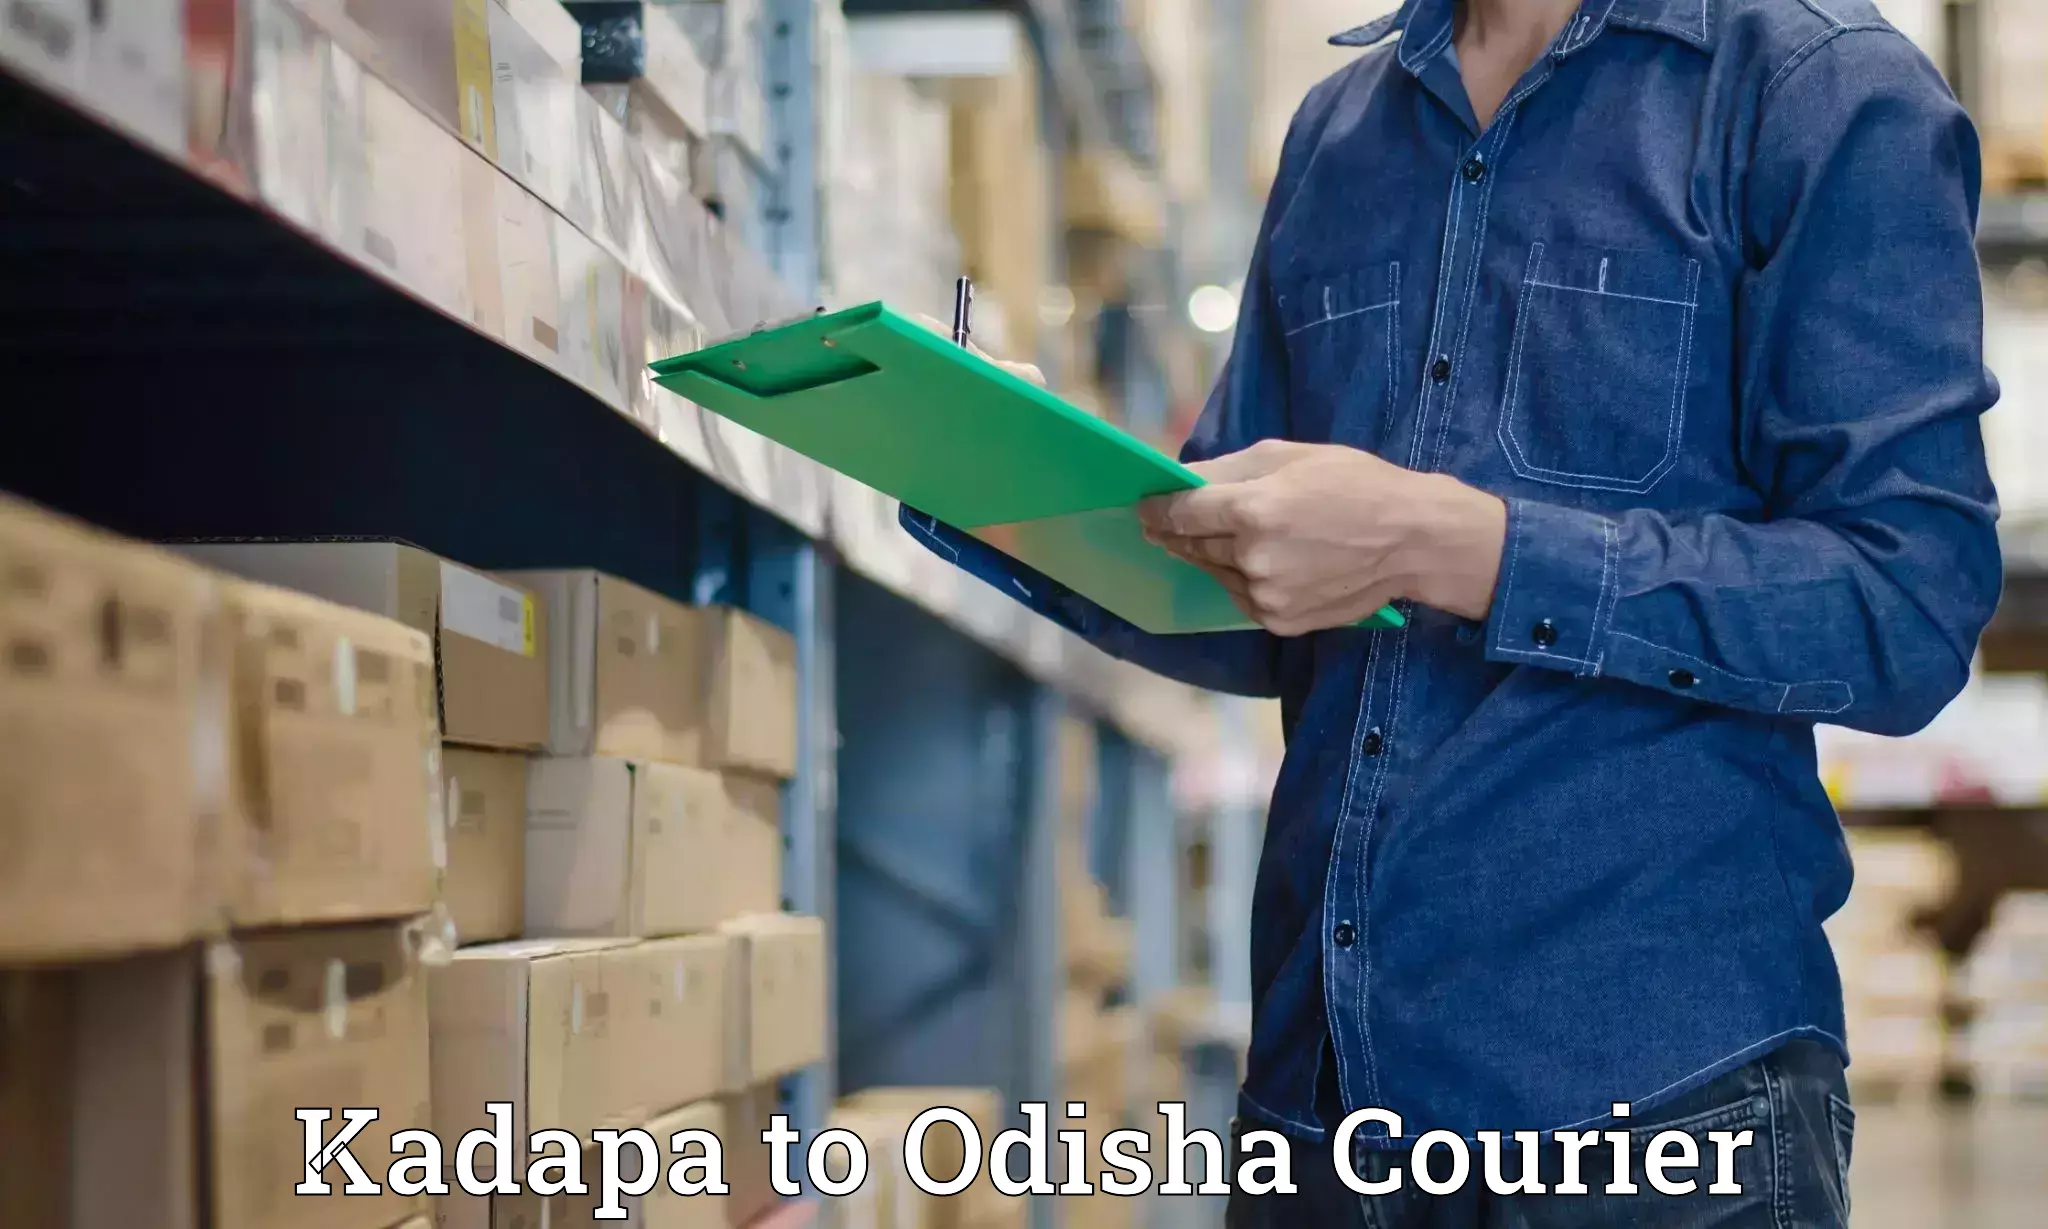 State-of-the-art courier technology Kadapa to Bangriposi